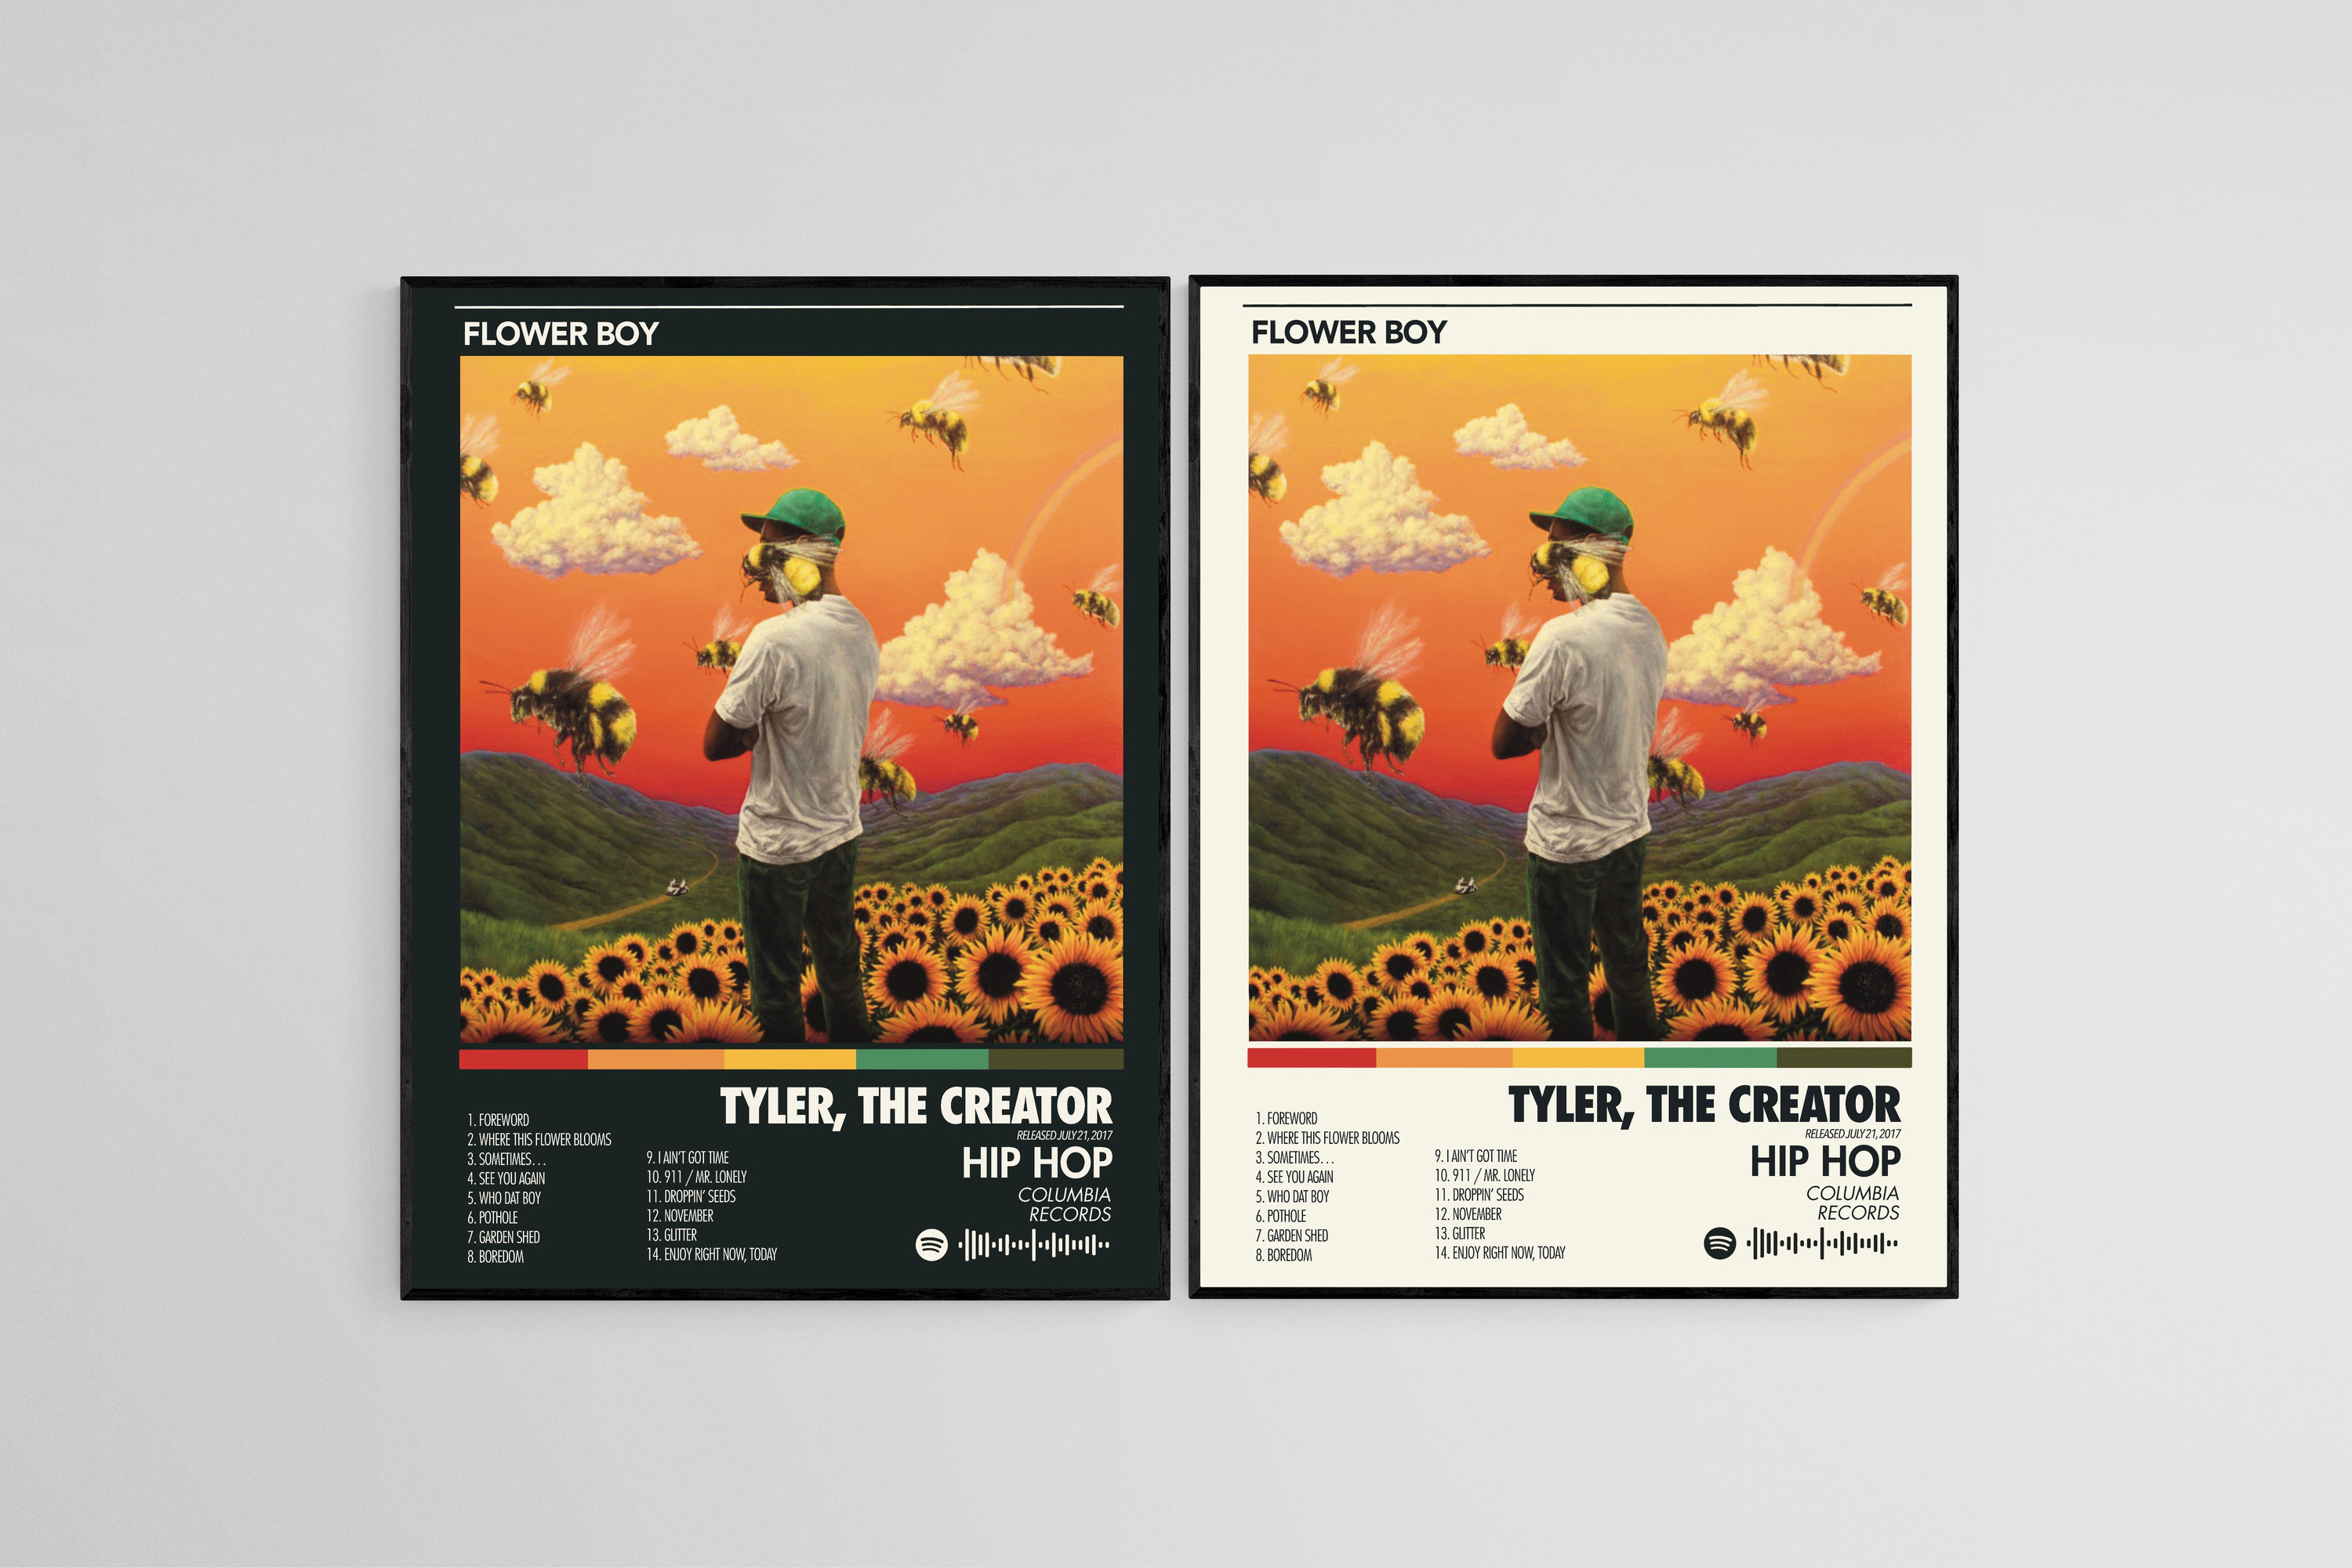 558416 Tyler The Creator Flower Boy Album HD Cover Art 24x18 WALL PRINT  POSTER